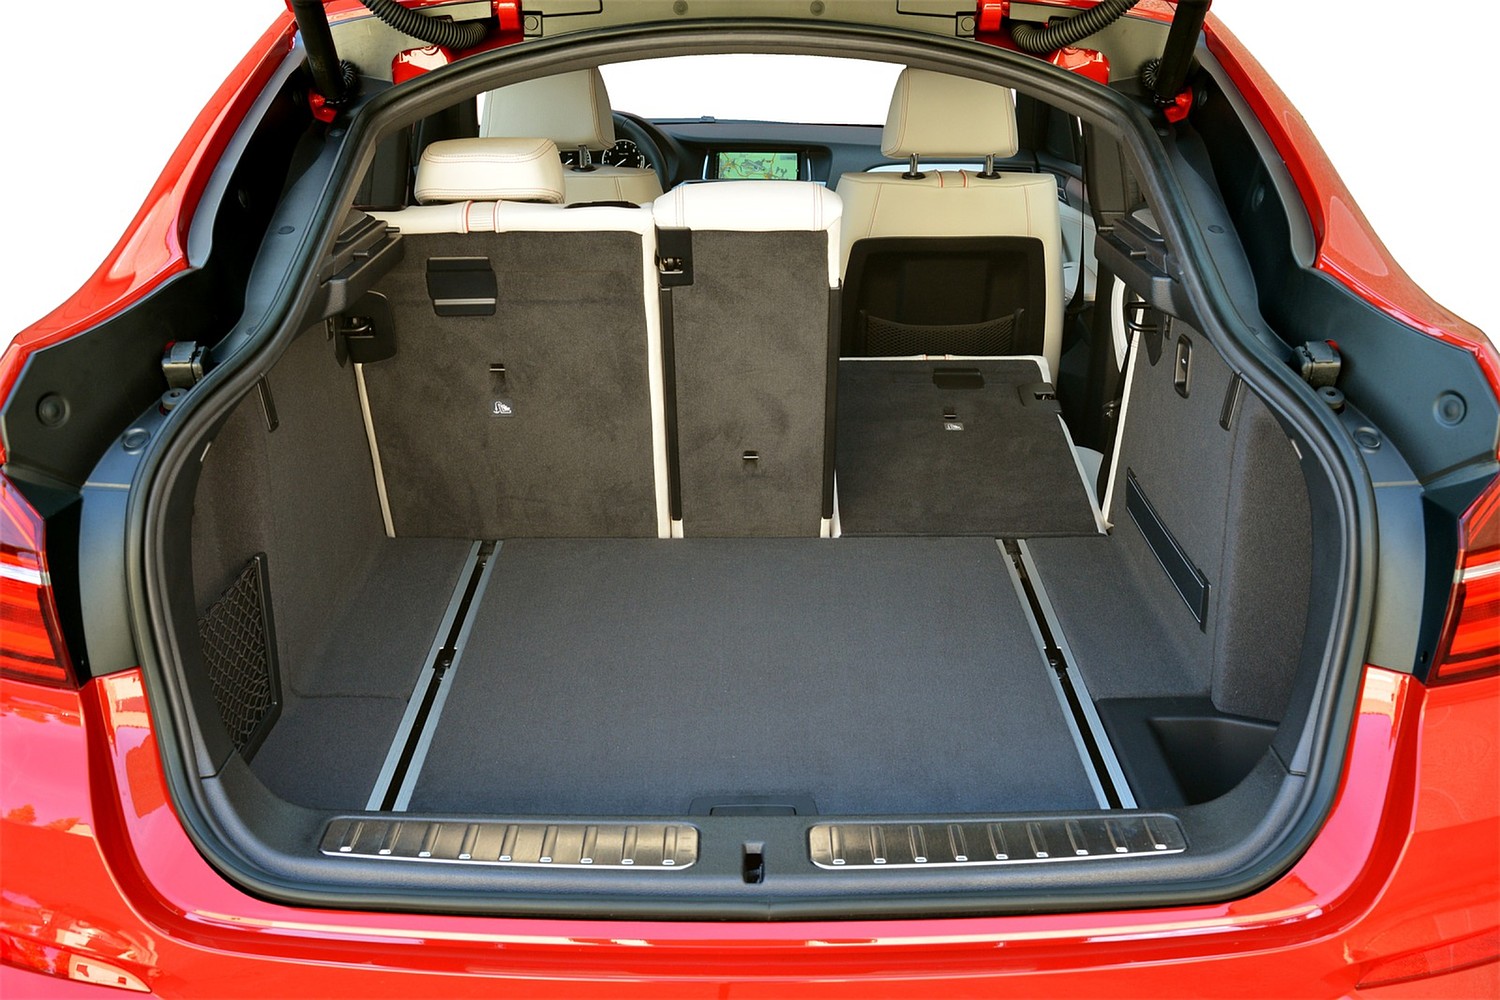 BMW X4 xDrive35i 4dr SUV Interior (2015 model year shown)